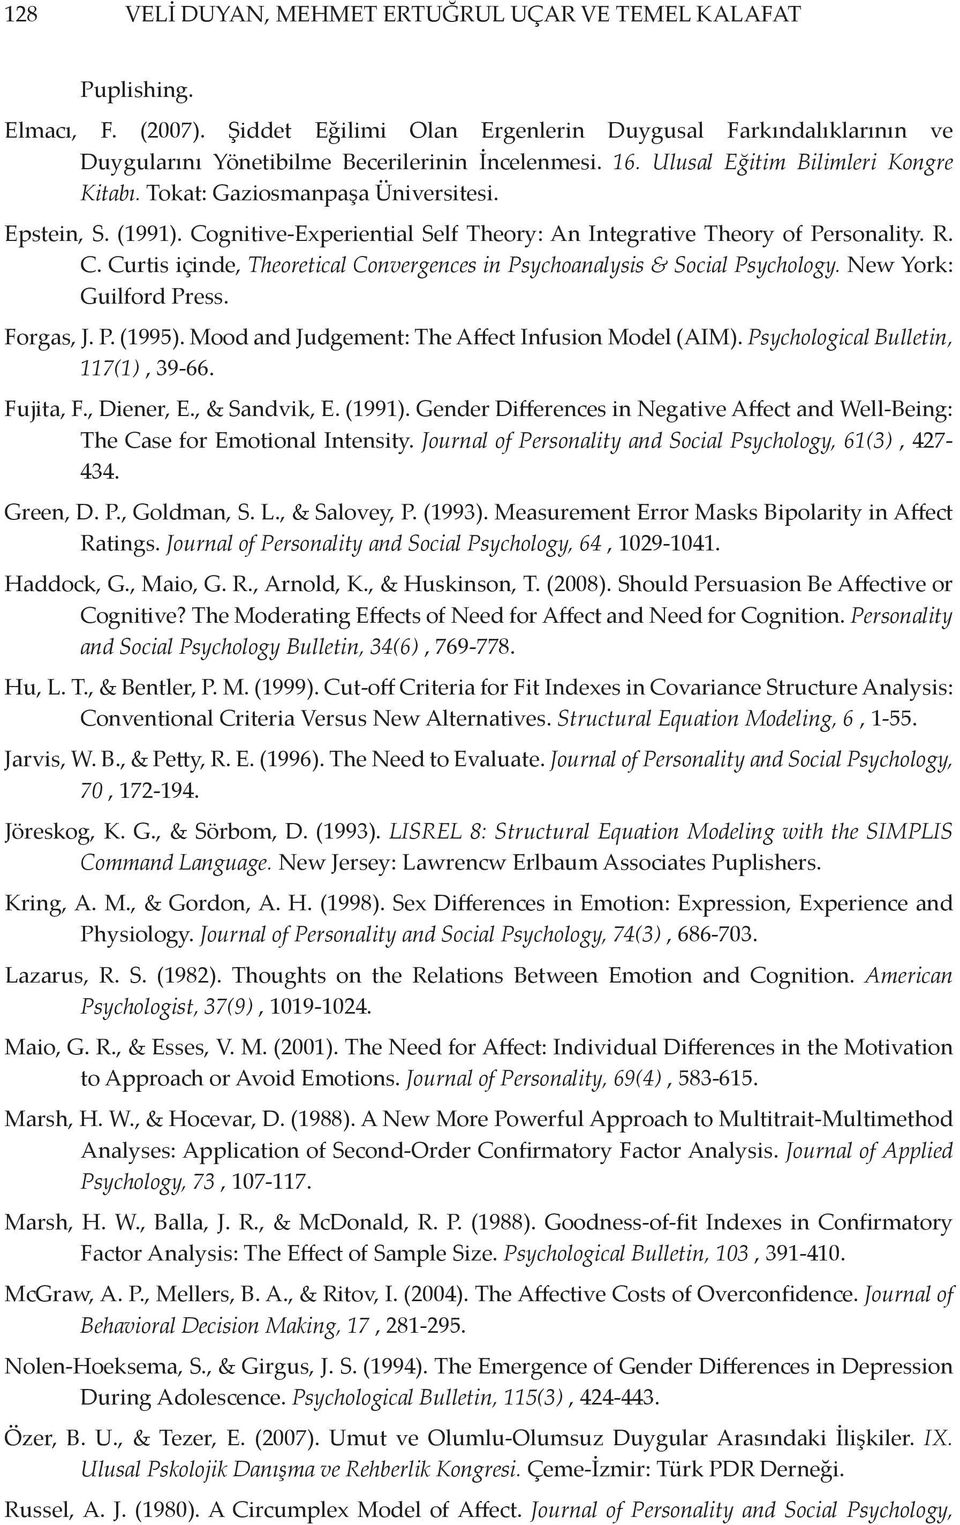 New York: Guilford Press. Forgas, J. P. (1995). Mood and Judgement: The Affect Infusion Model (AIM). Psychological Bulletin, 117(1), 39-66. Fujita, F., Diener, E., & Sandvik, E. (1991).